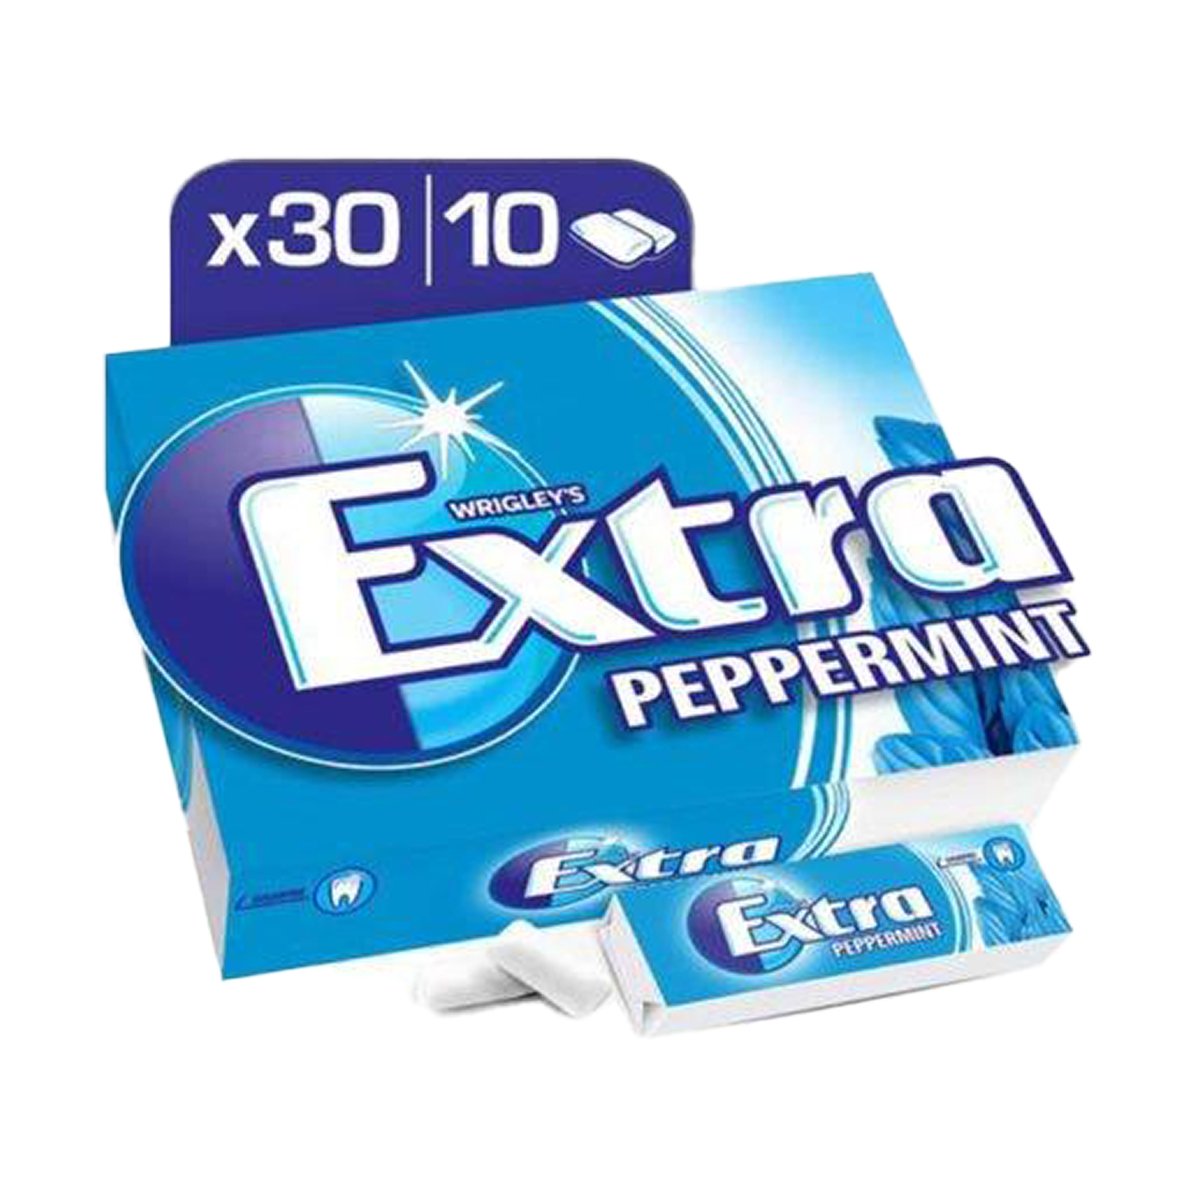 Wrigley's Extra Peppermint Gum 30 x 10 pcs